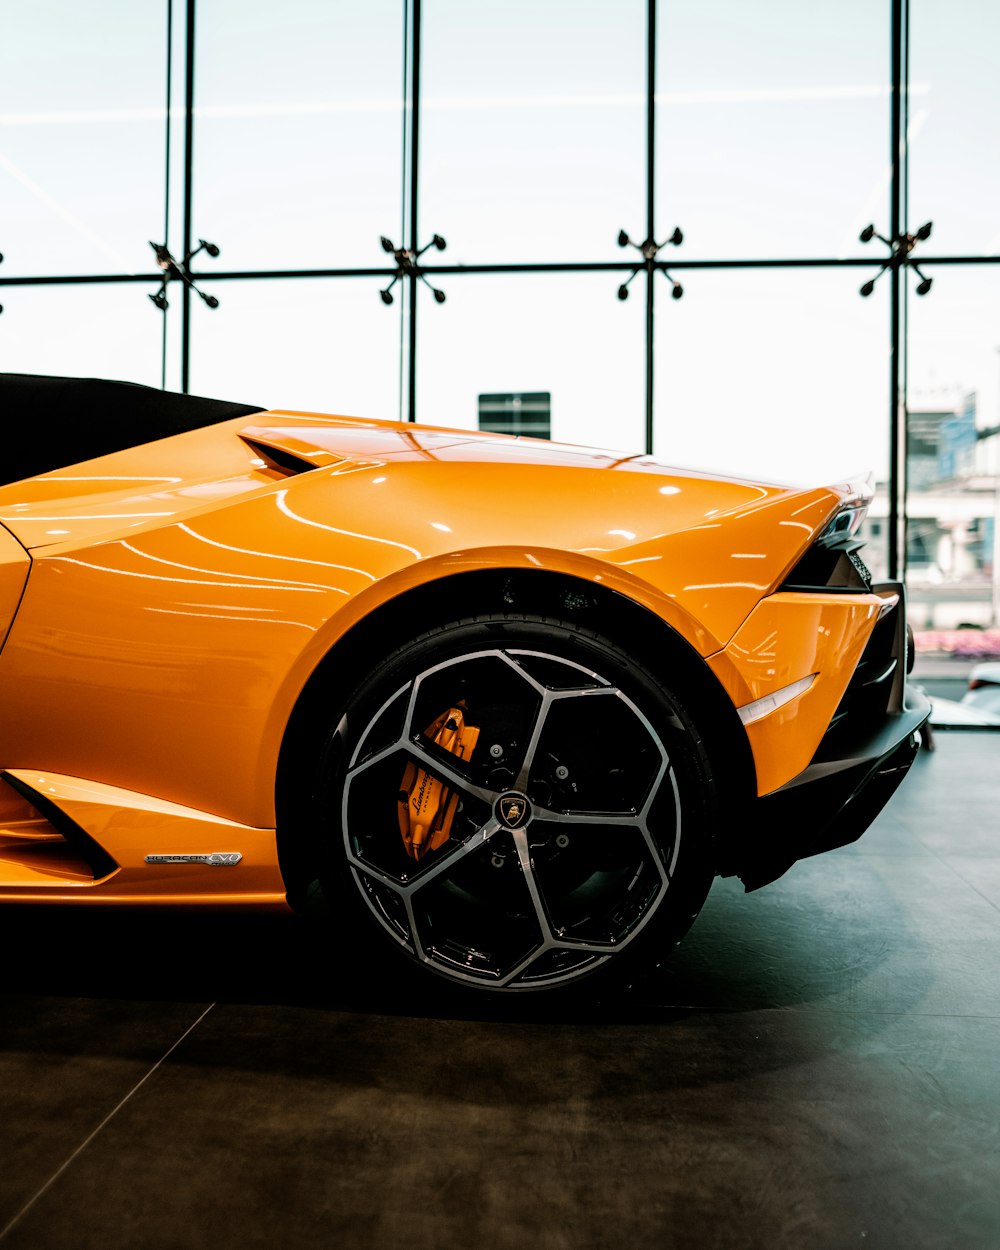 a shiny orange sports car